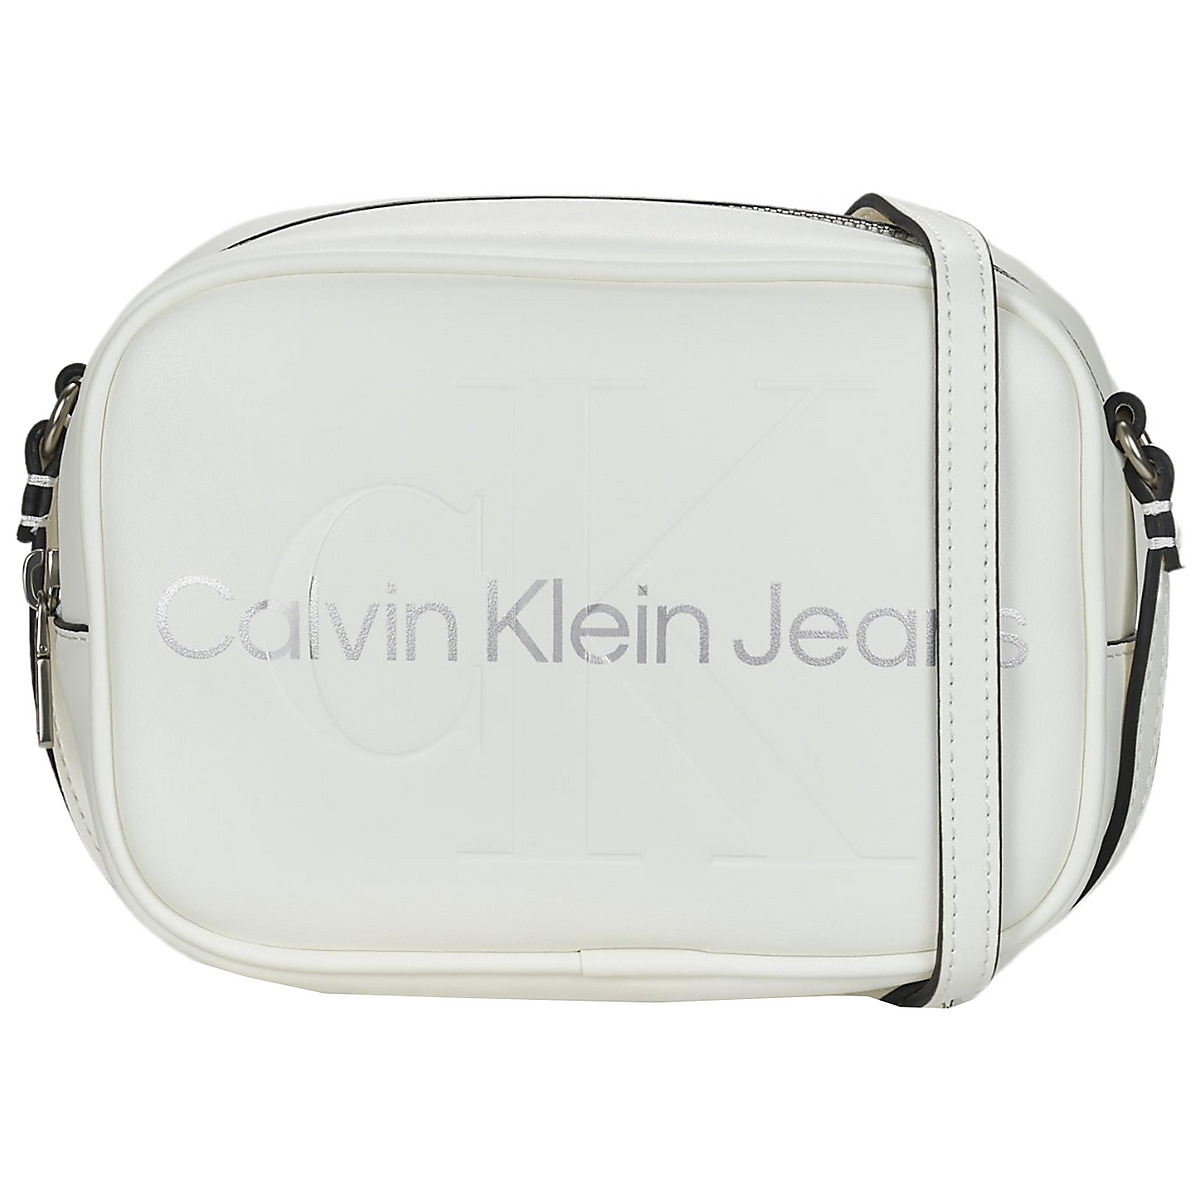 Malas Homem Calvin Klein branding to chest SCULPTED CAMERA BAG18MONO Branco